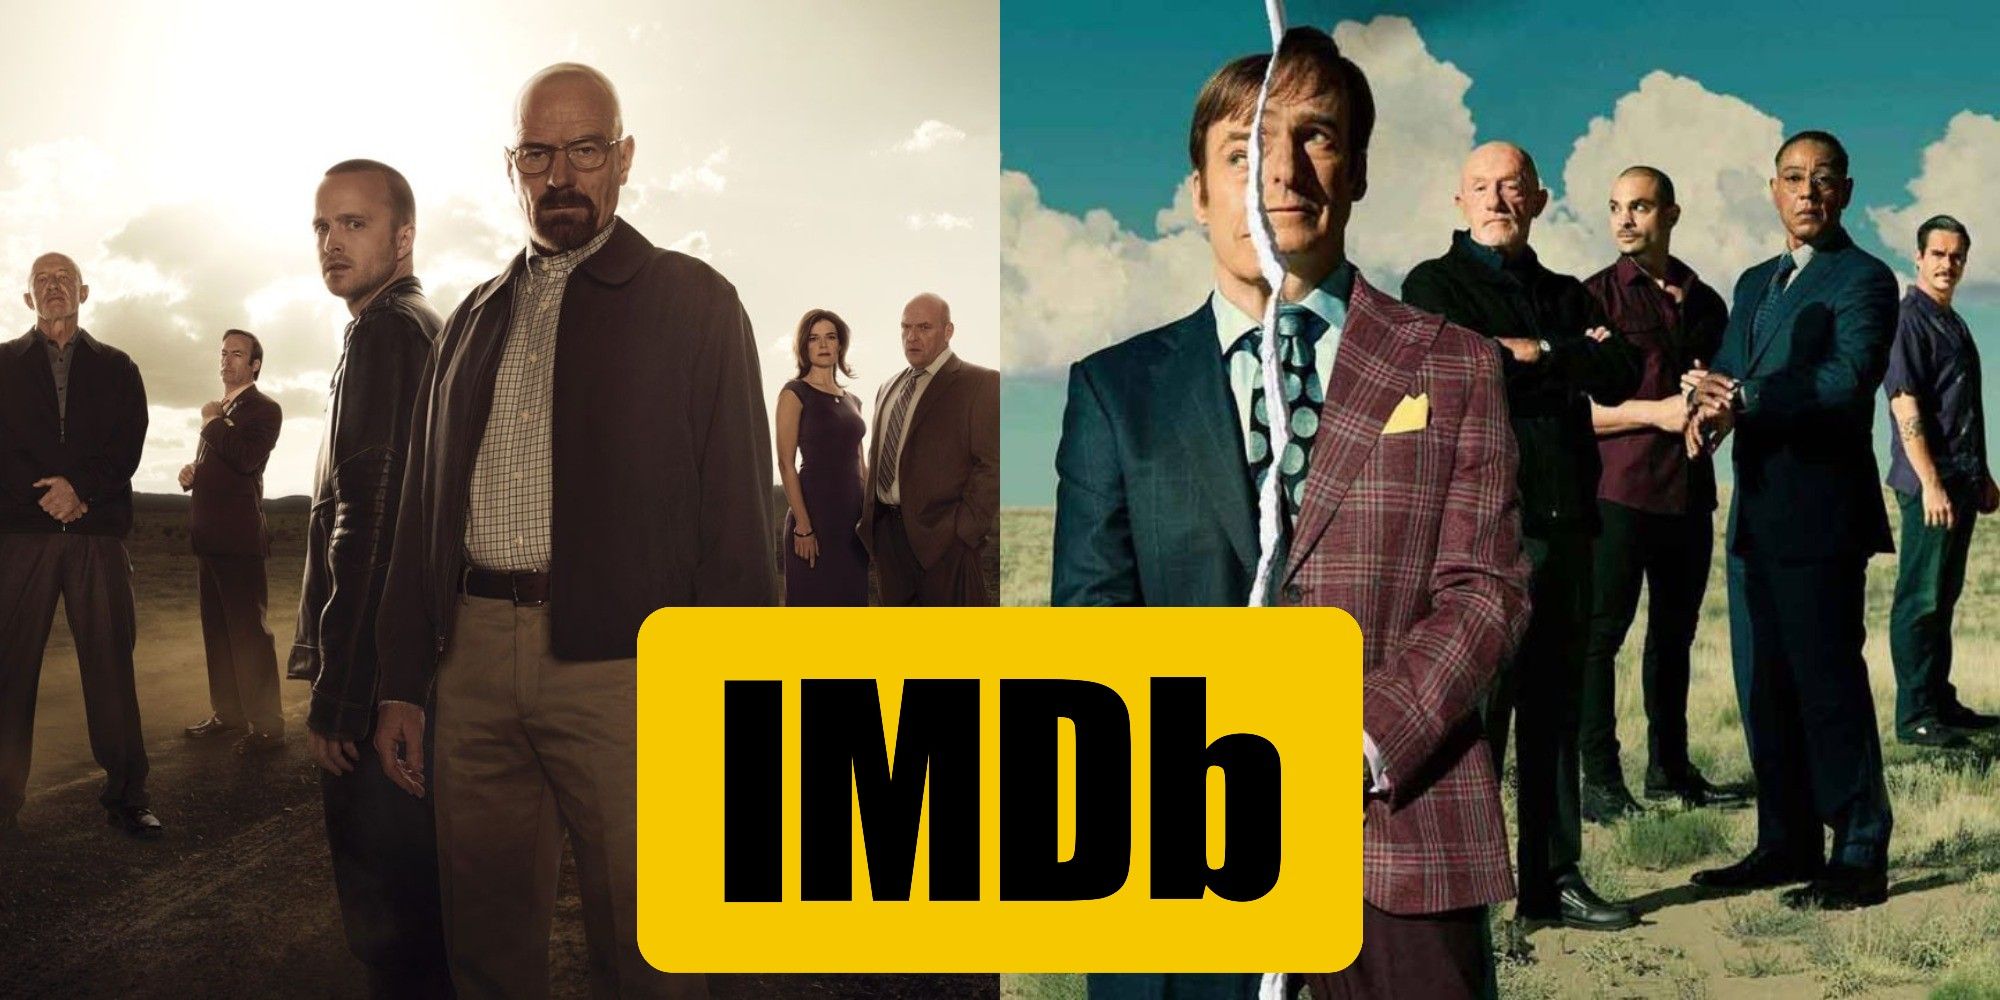 Every Season Of Better Call Saul & Breaking Bad Ranked According To IMDb